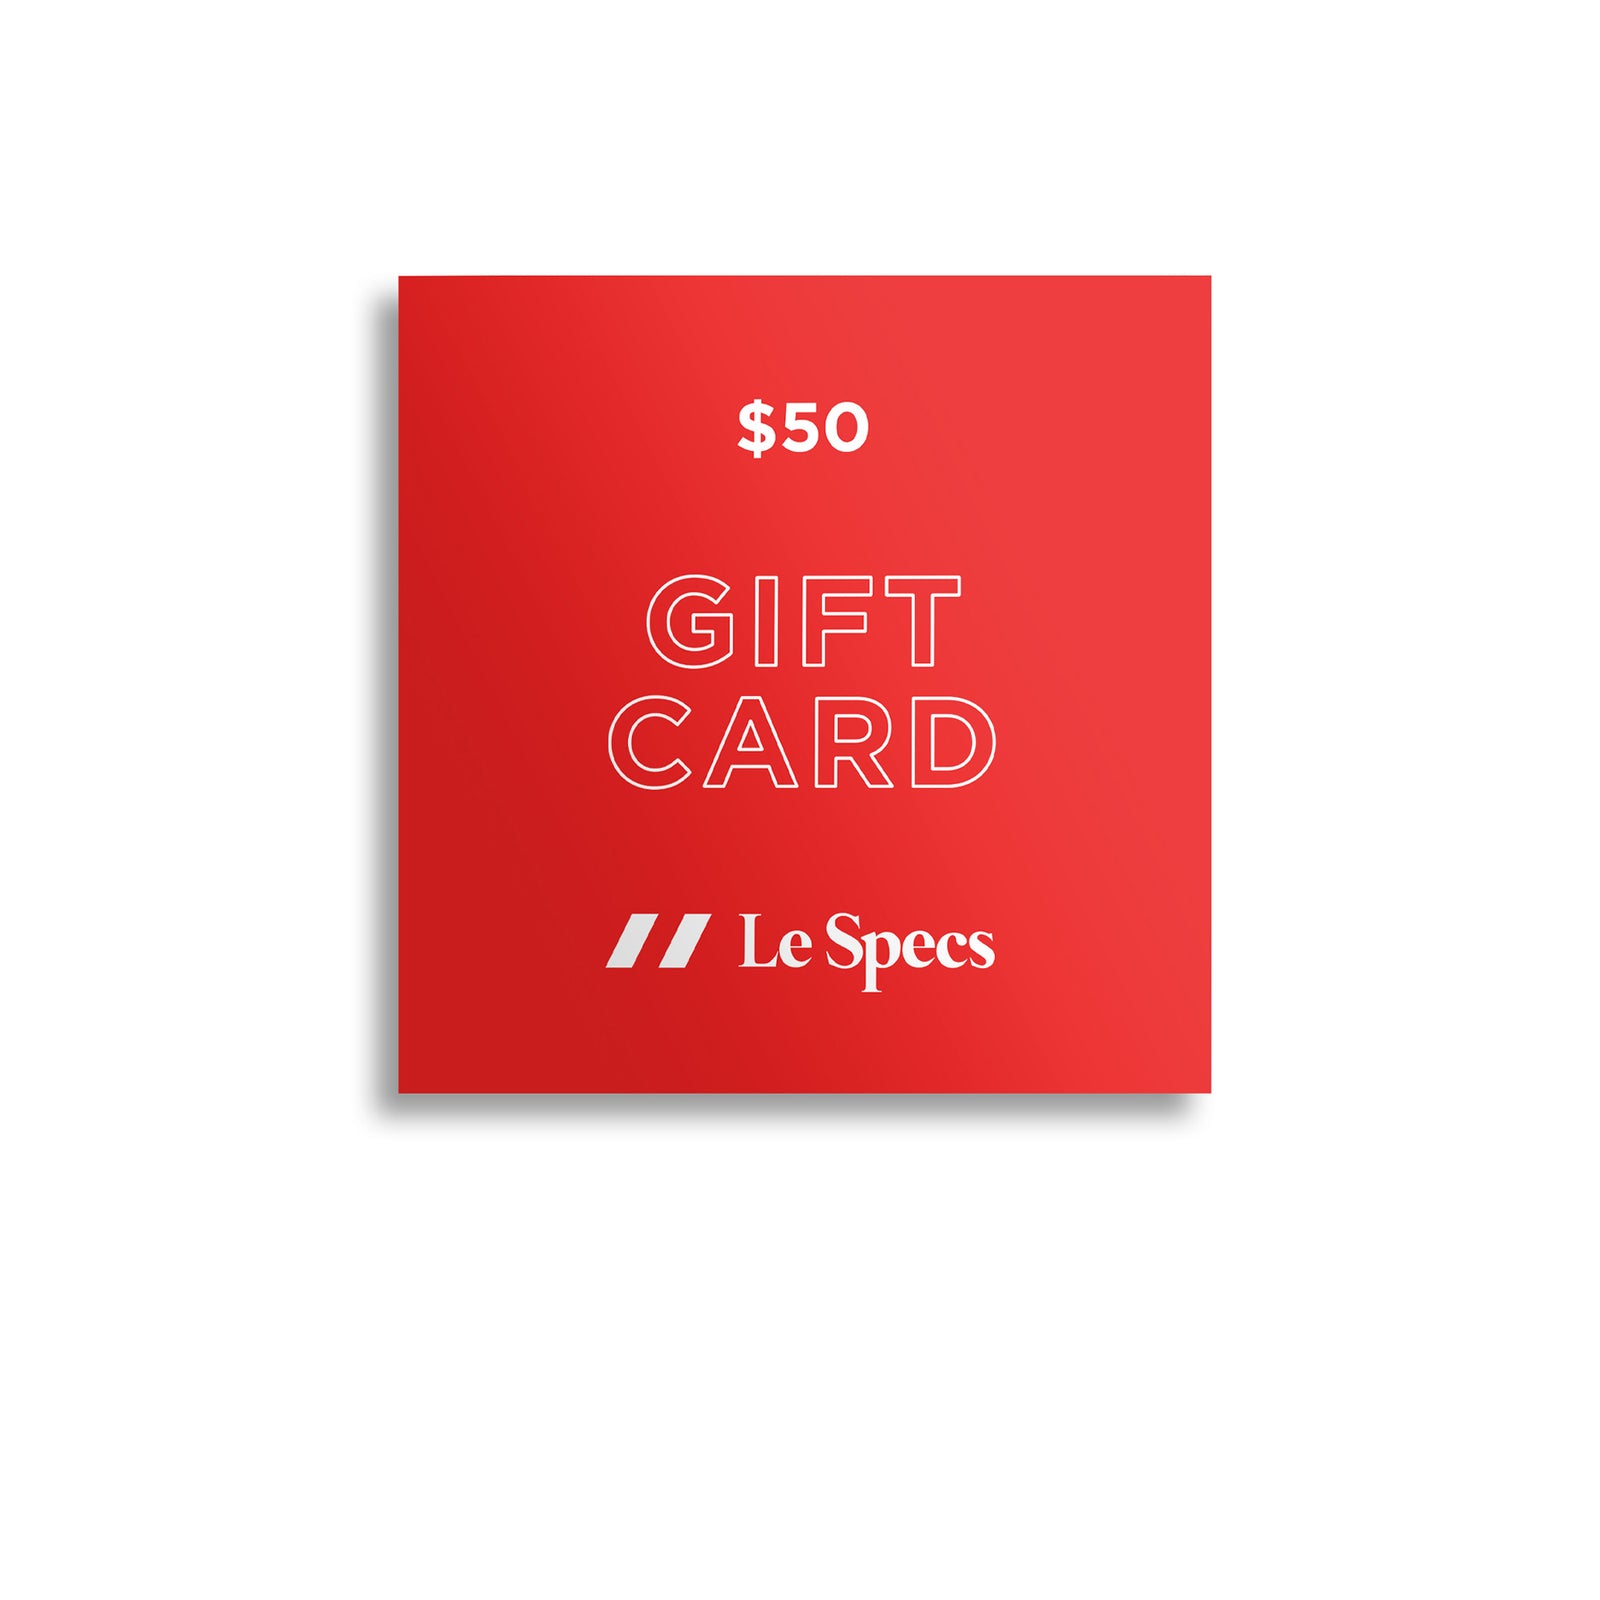 $50 E-Gift Card